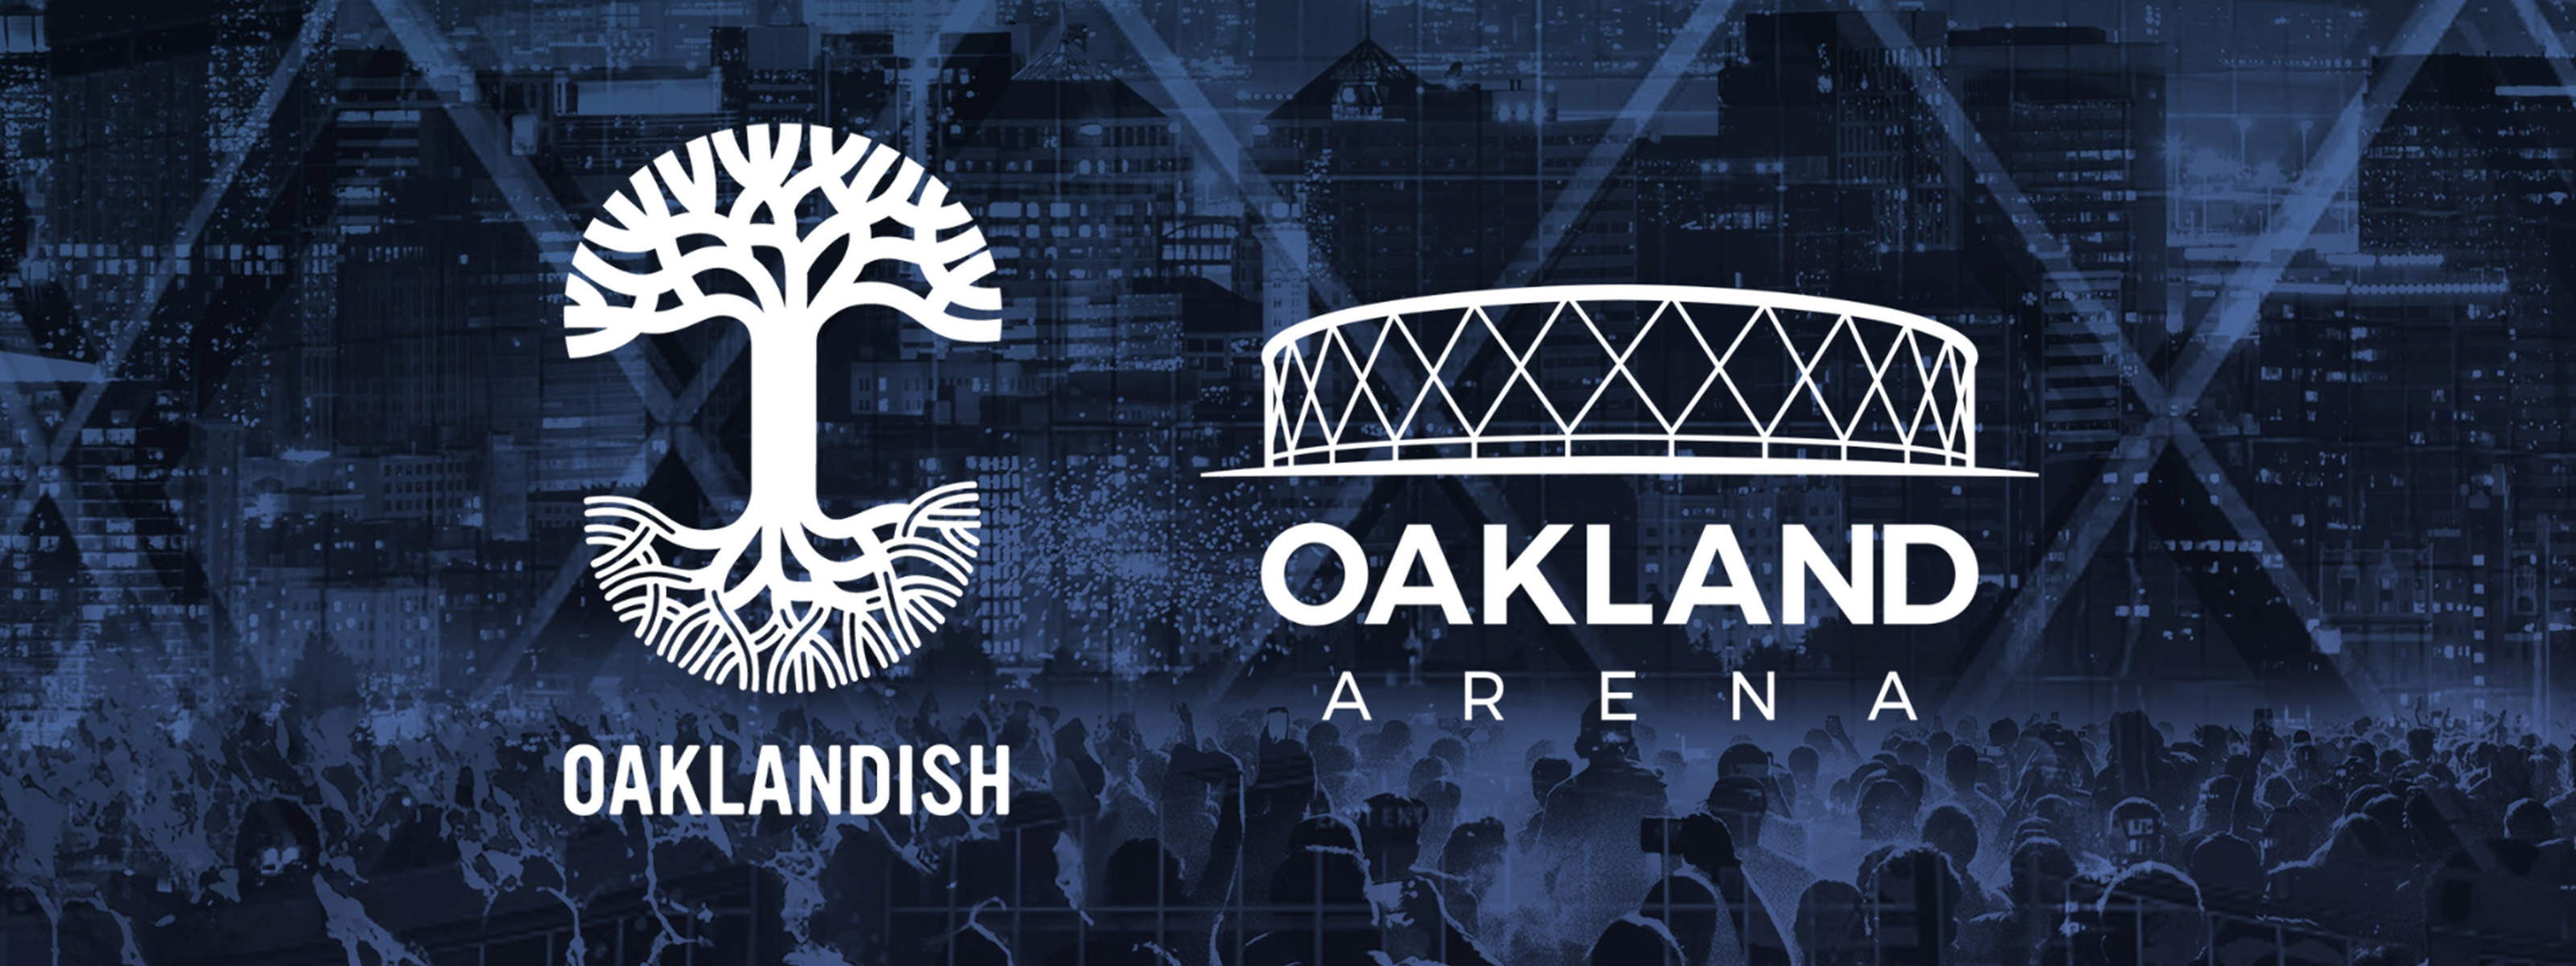 Oakland Arena x Oaklandish banner